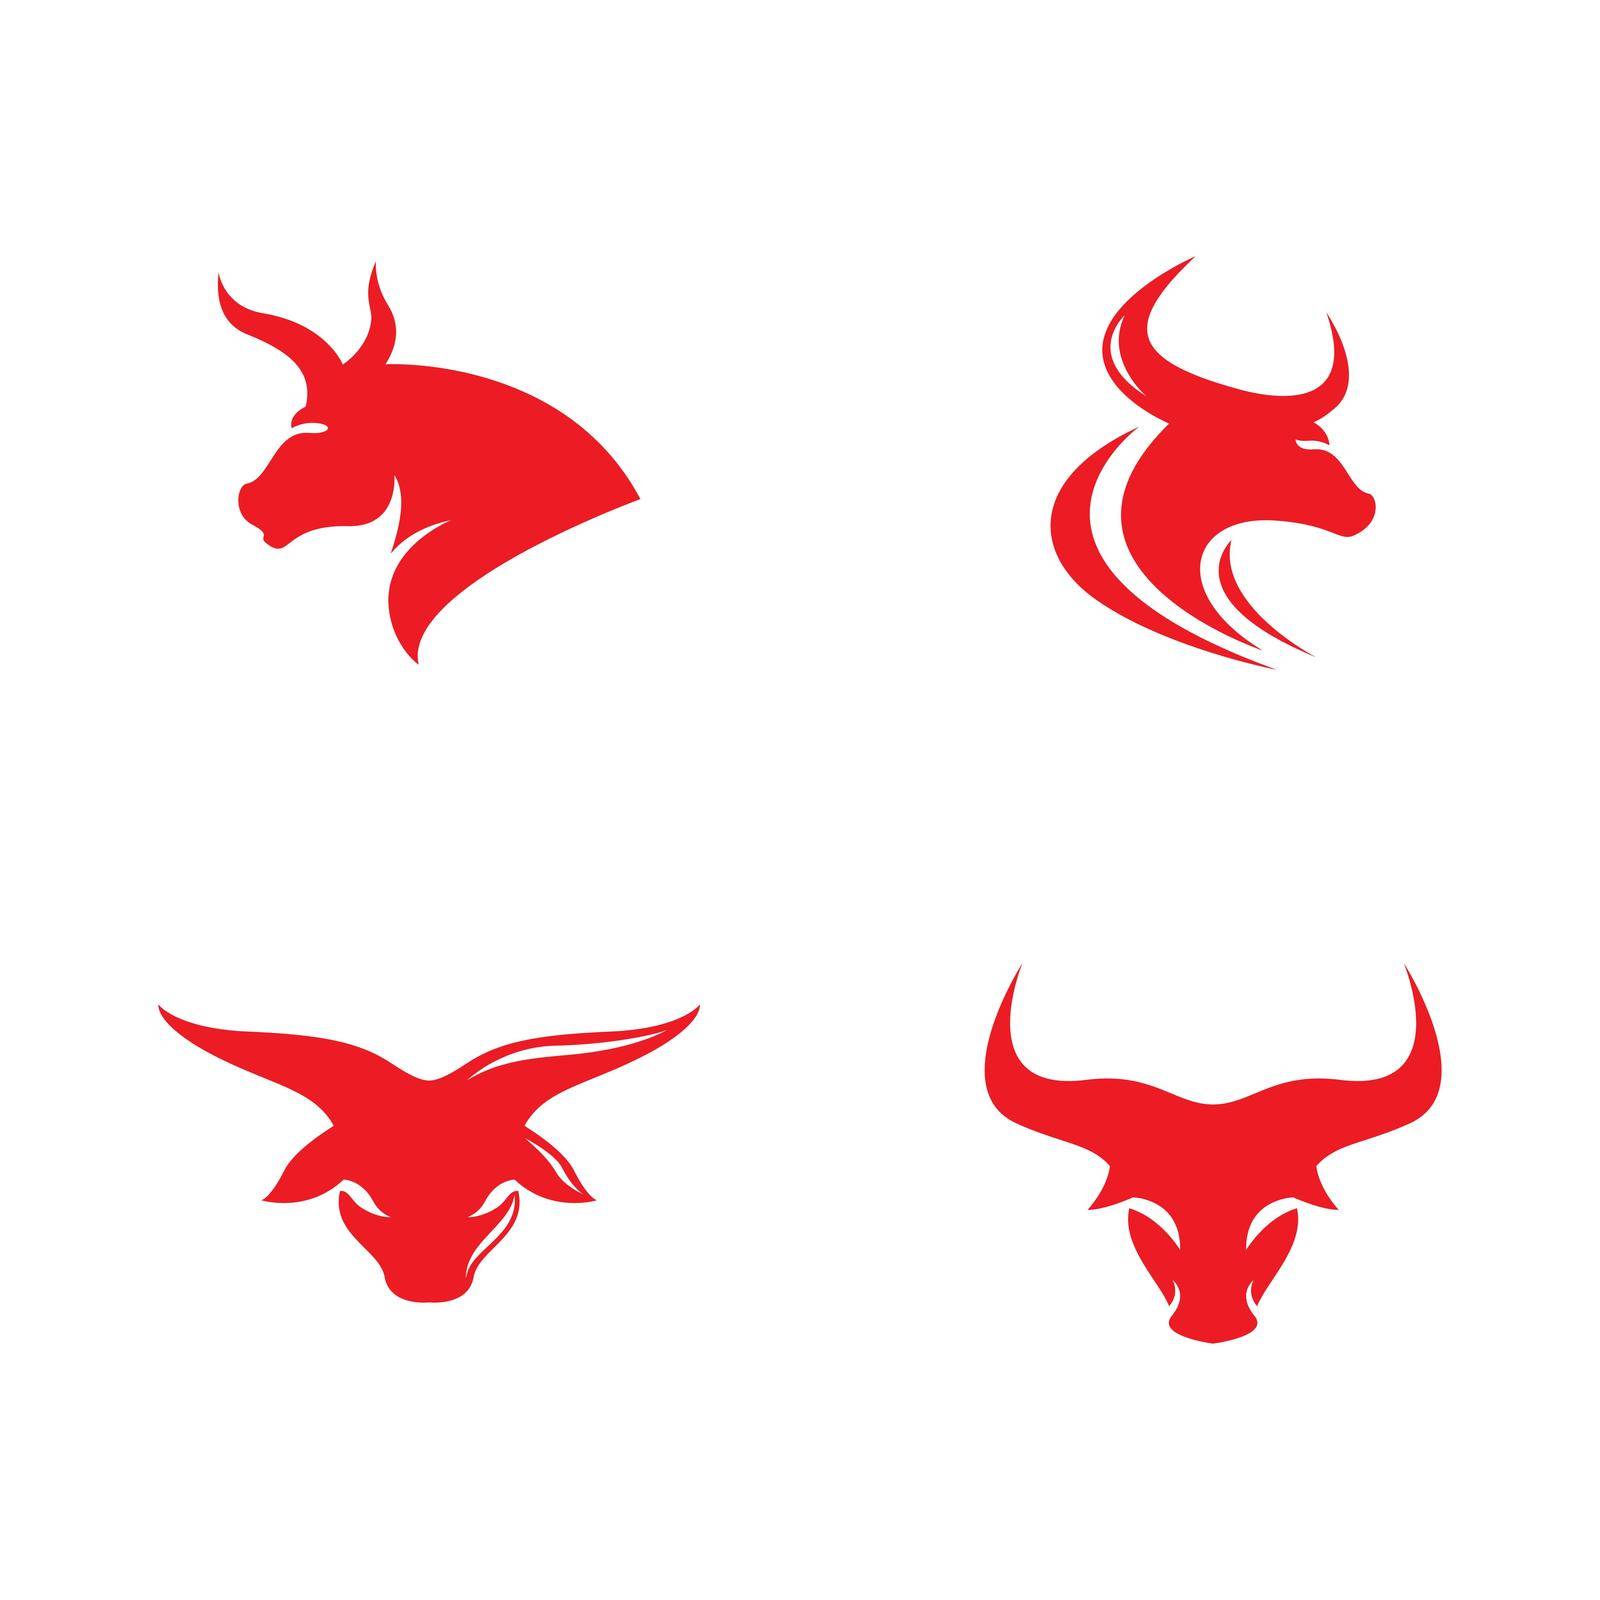 Bull head logo vector icon by Attades19